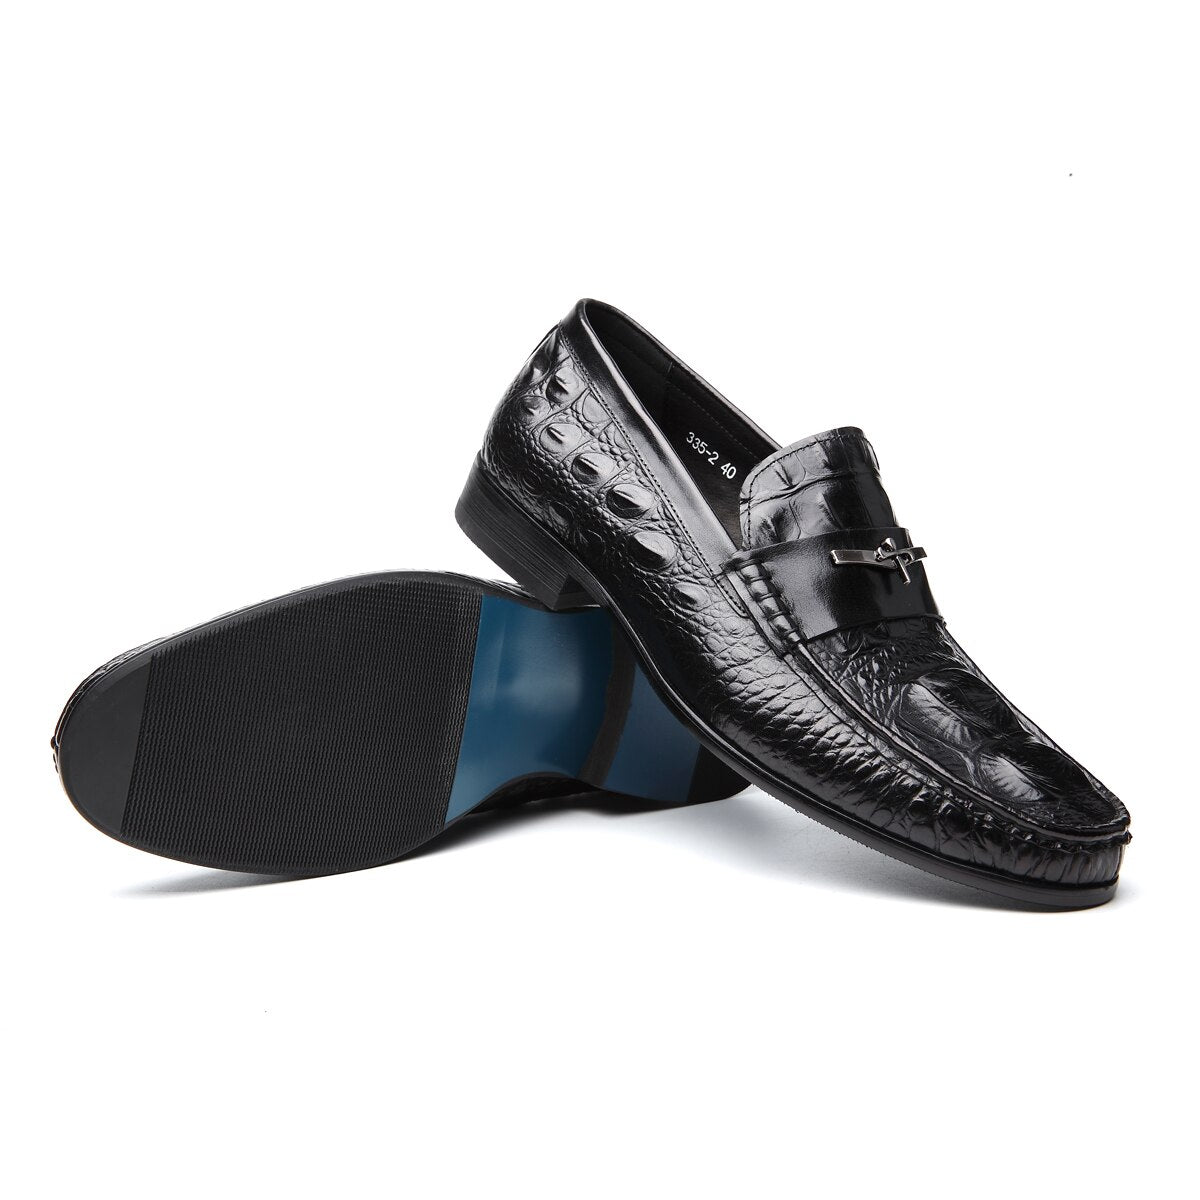 Fashion Luxury Elegant Dress Slip On Pointed Tassel Loafer Casual Shoes Wedding Party Office Footwear